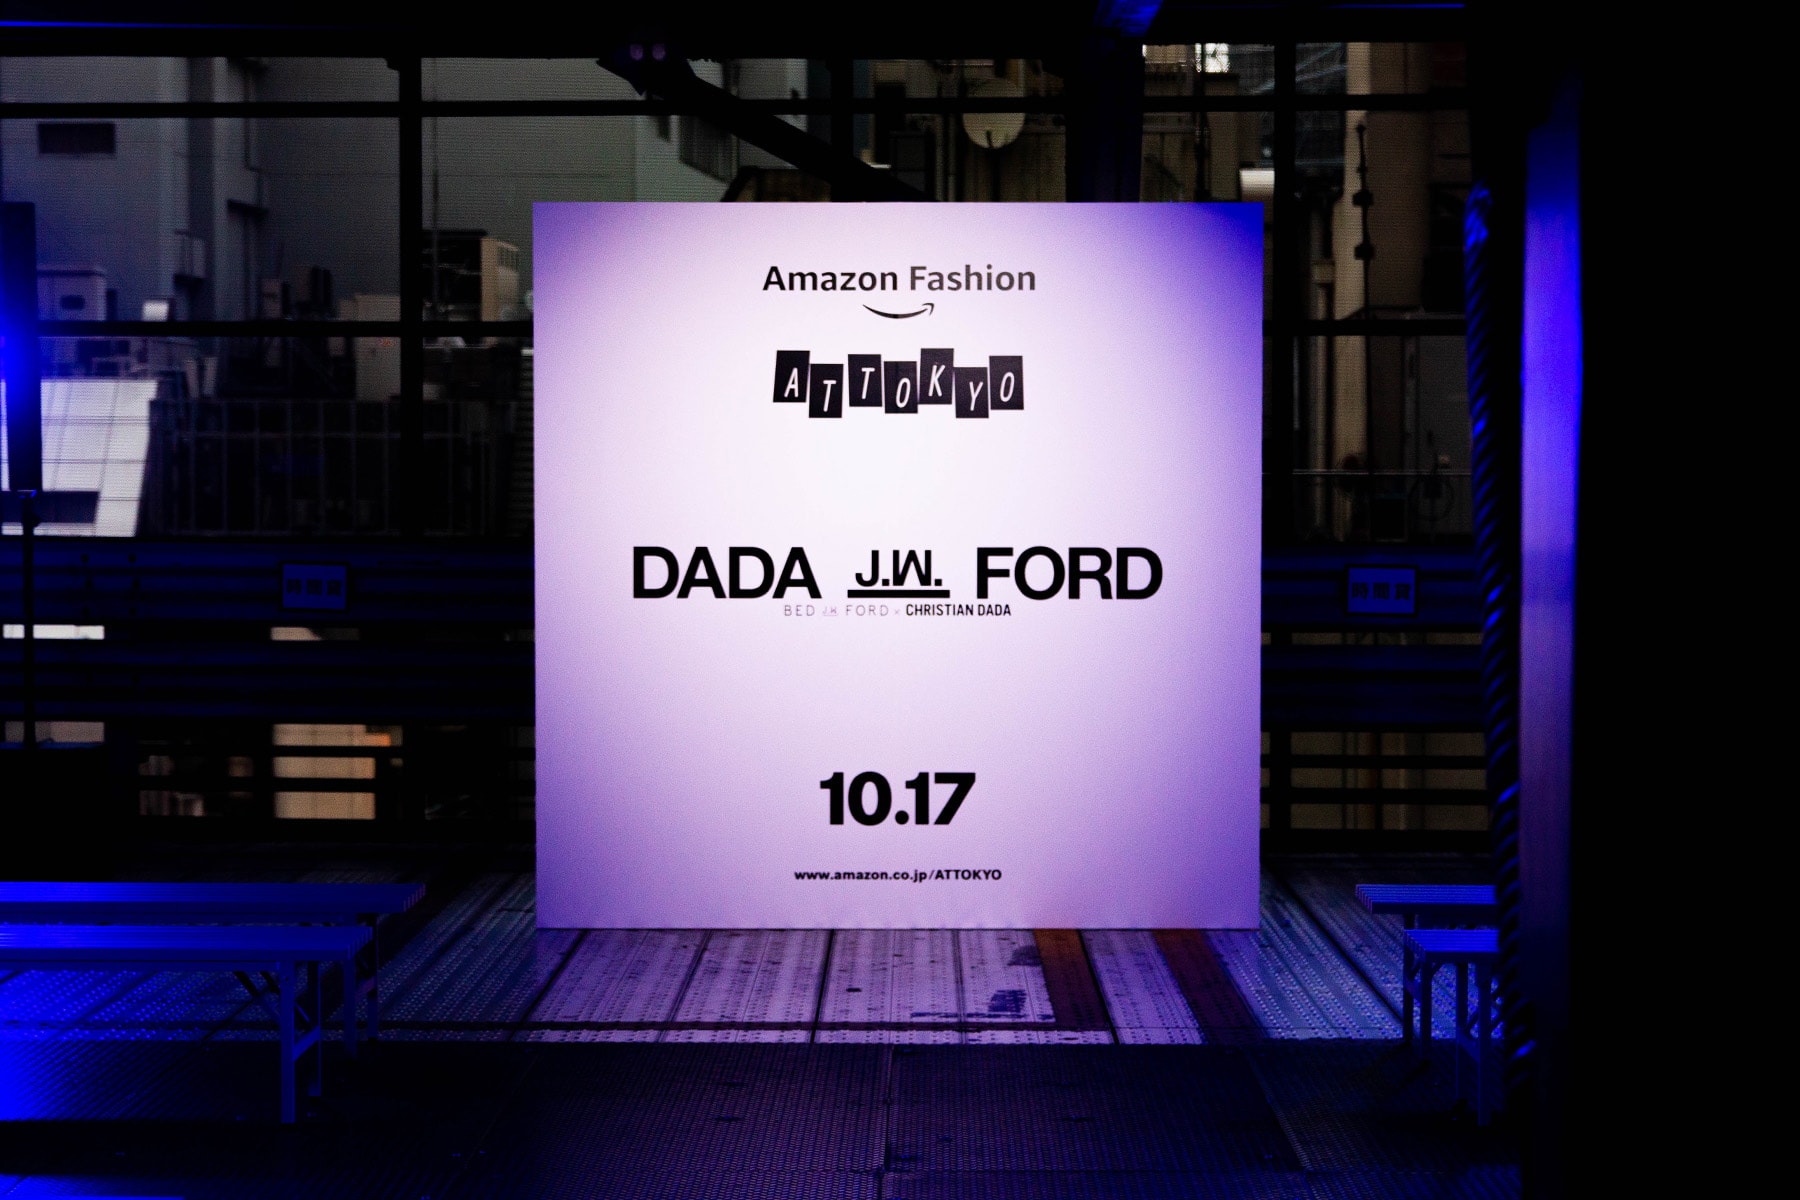 BED J.W. FORD ベッドフォード CHRISTIAN DADA クリスチャンダダ アマゾン ファッションウィーク 東京 合同